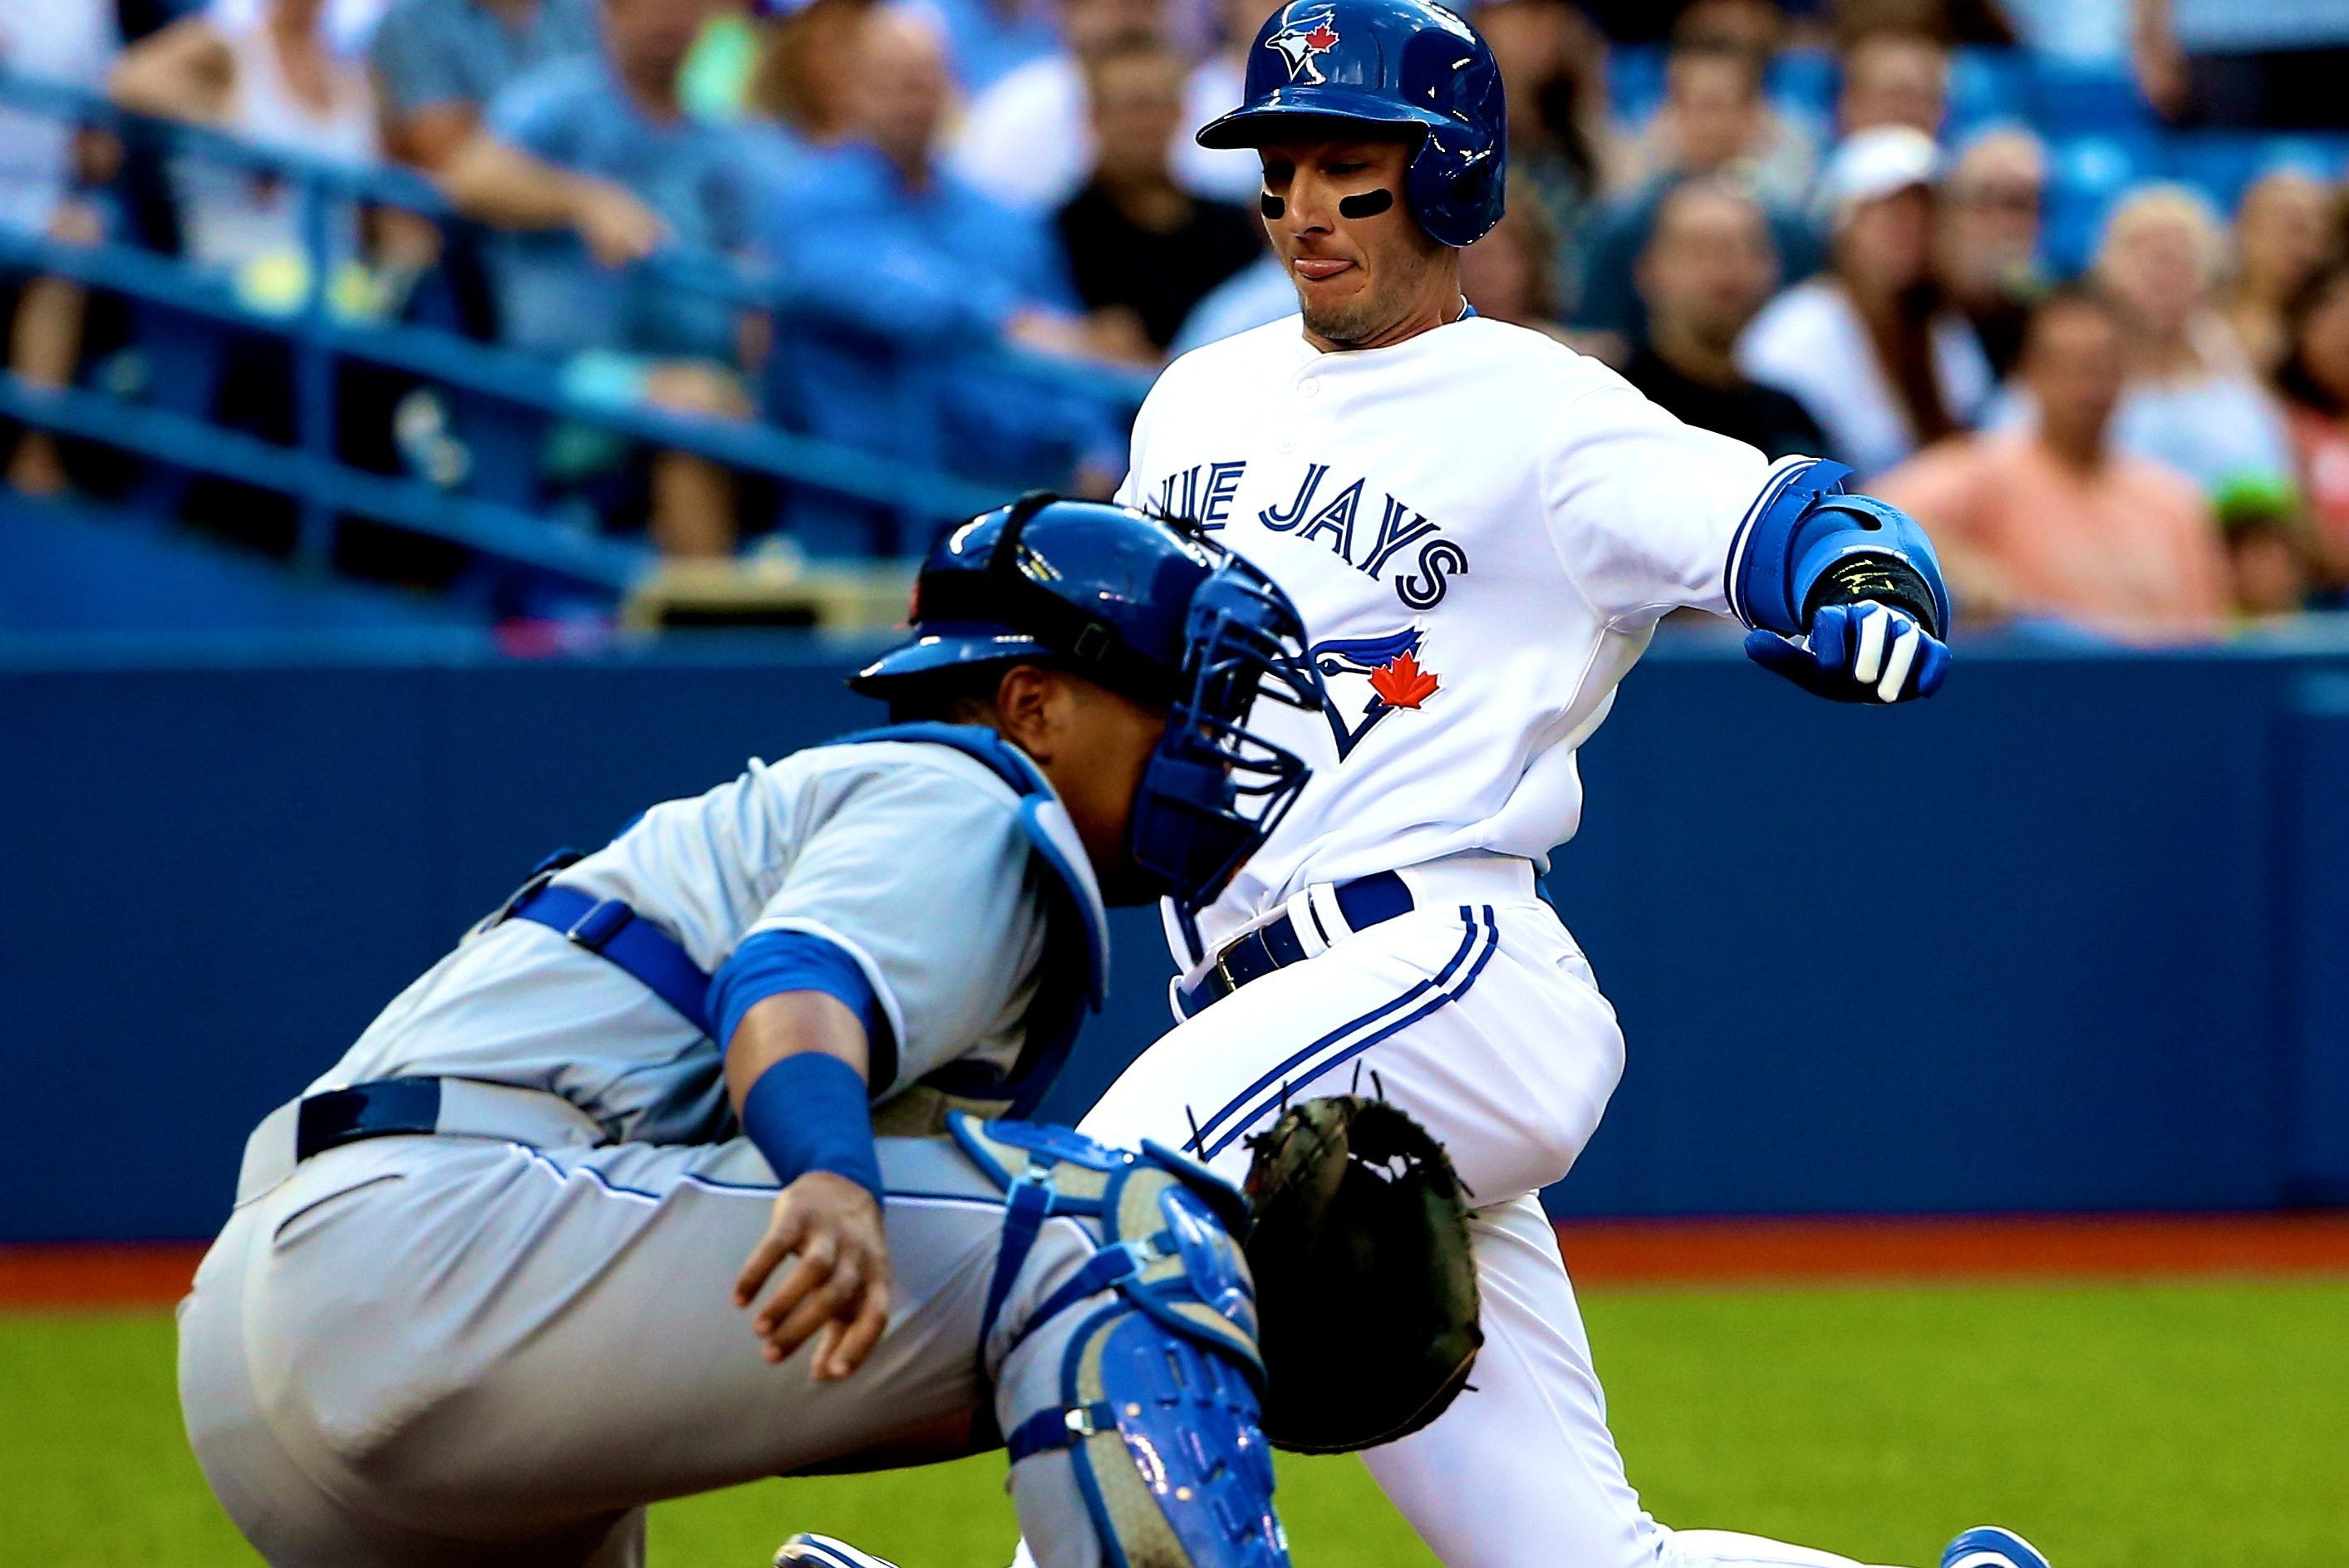 MLB Notes: Blue Jays' Josh Donaldson to undergo MRI on sore right